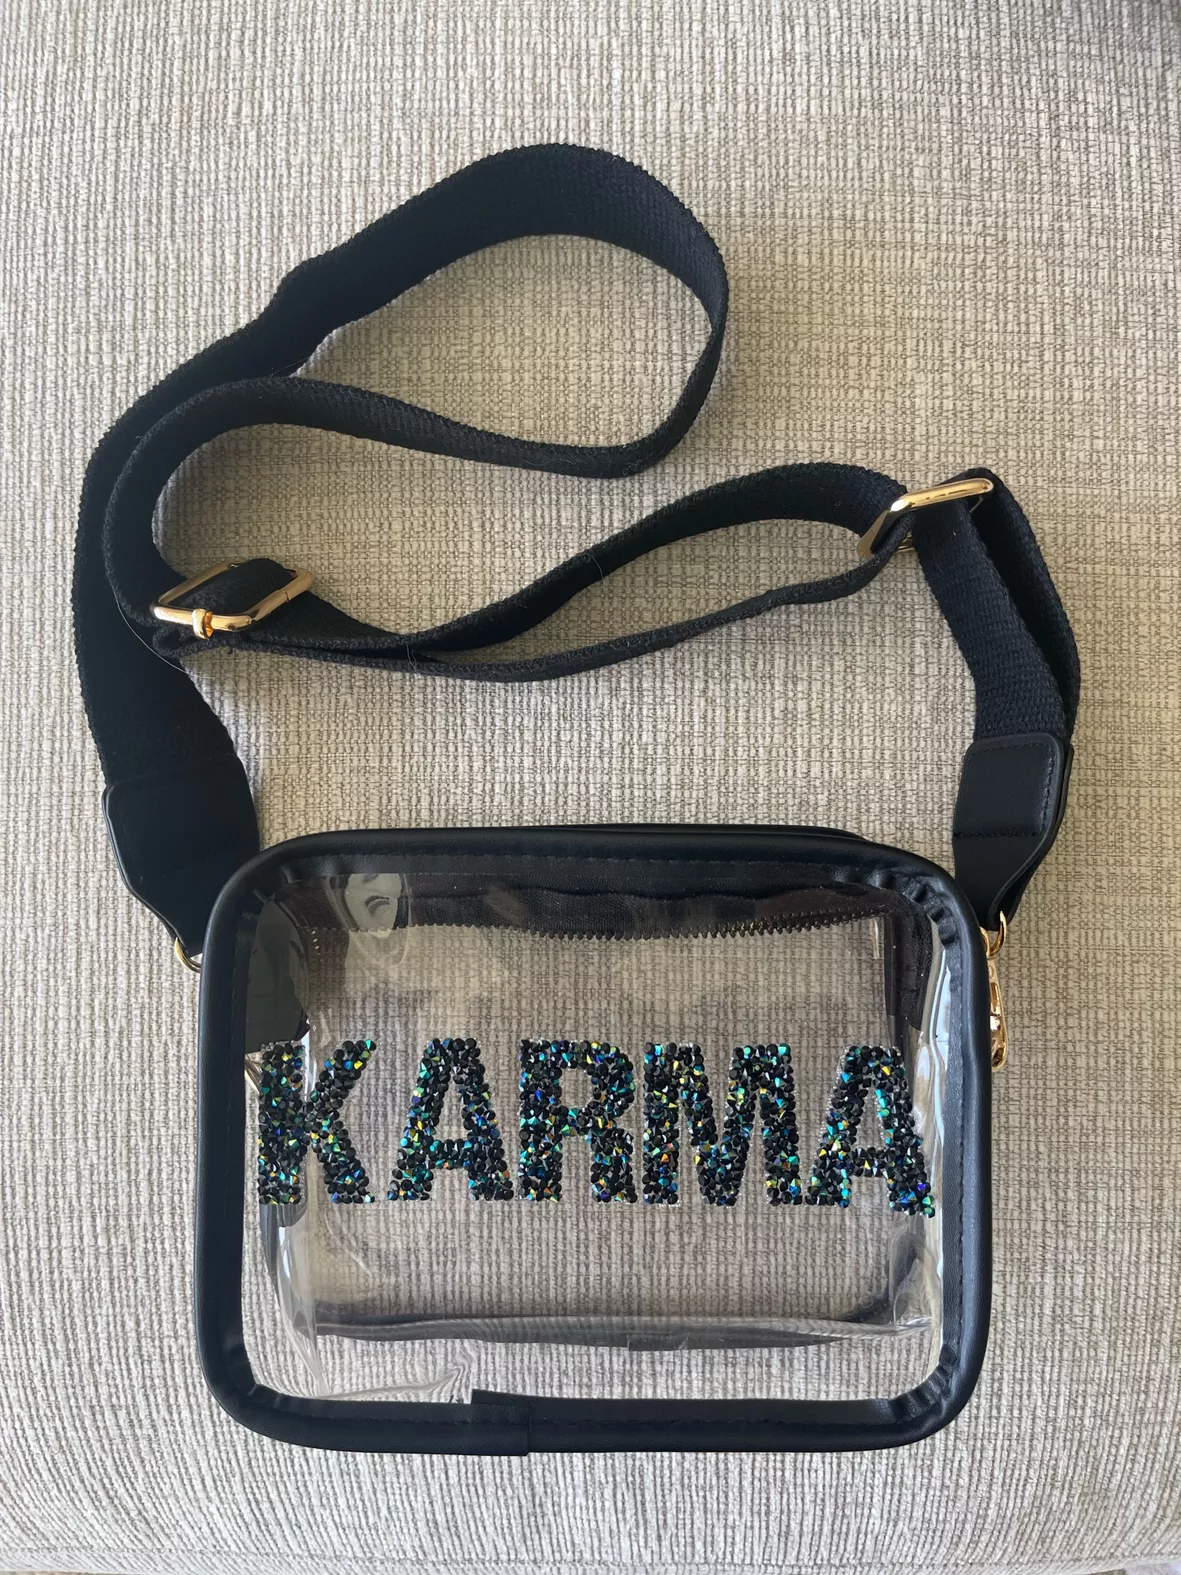 Taylor Swift Concert Clear Stadium Bag - Karma